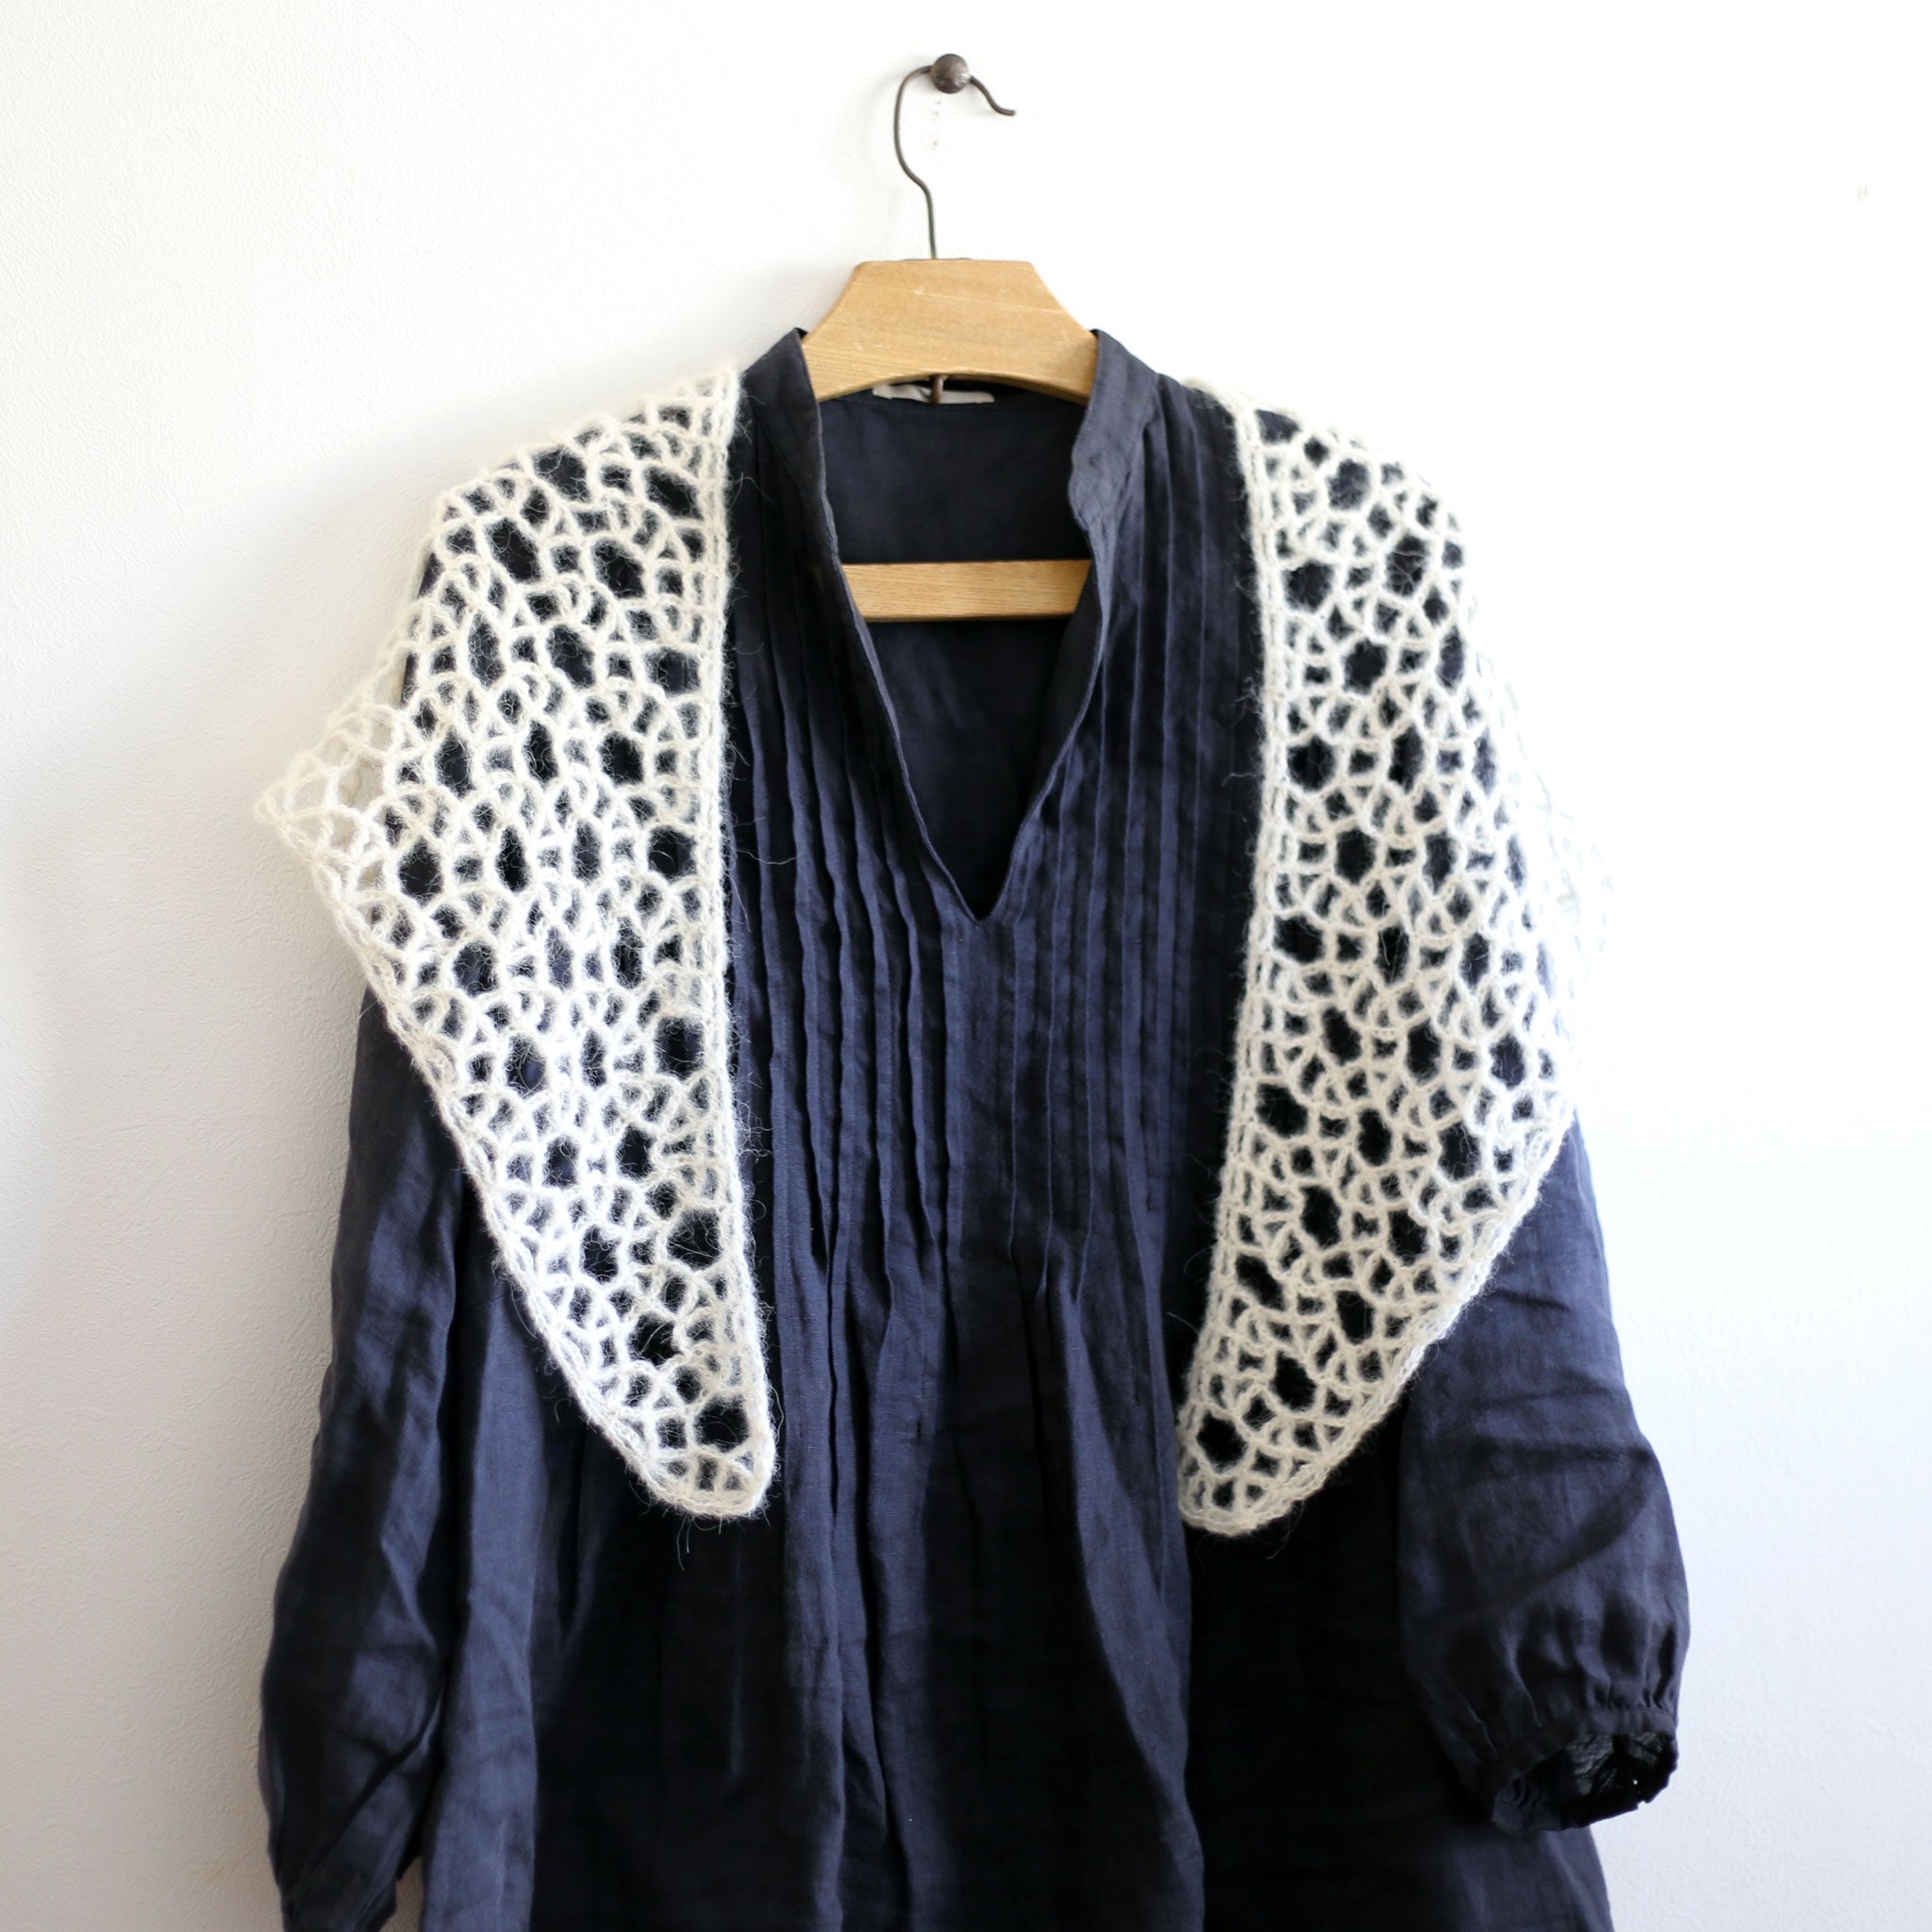 "Accessories shawl" Crochet Pattern